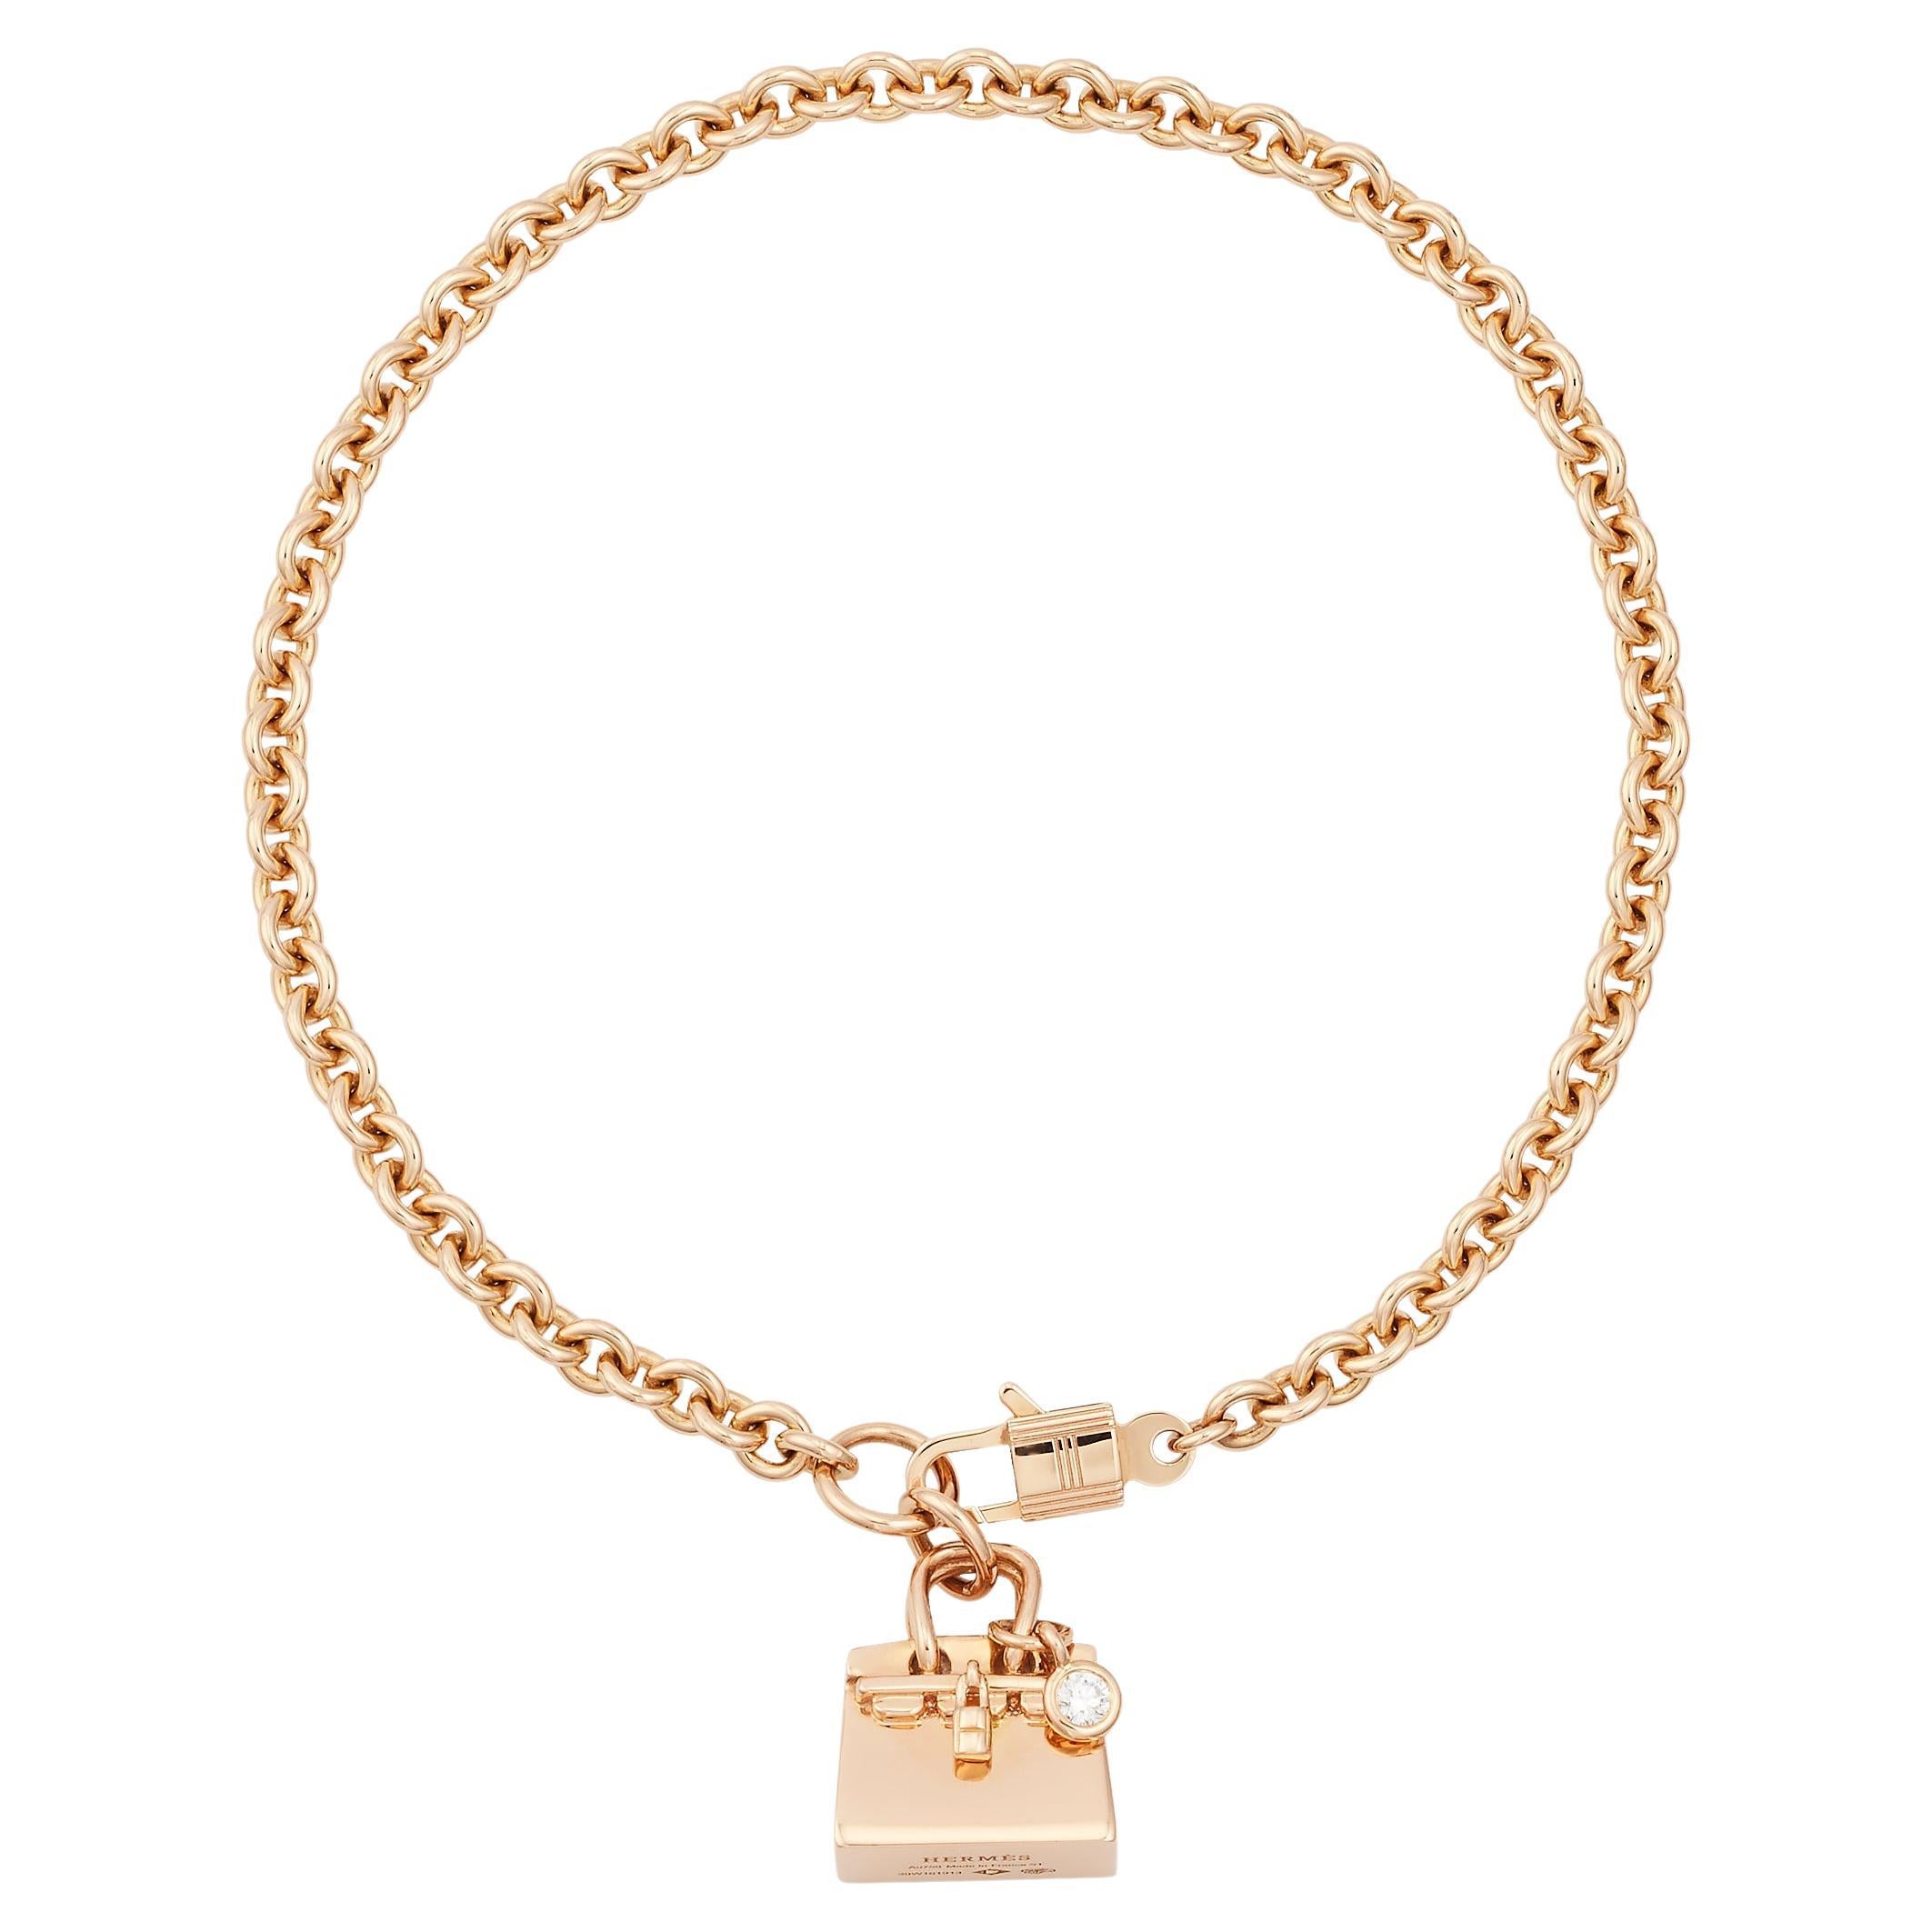 Hermes Birkin Amulette Diamond Bracelet in 18K Rose Gold